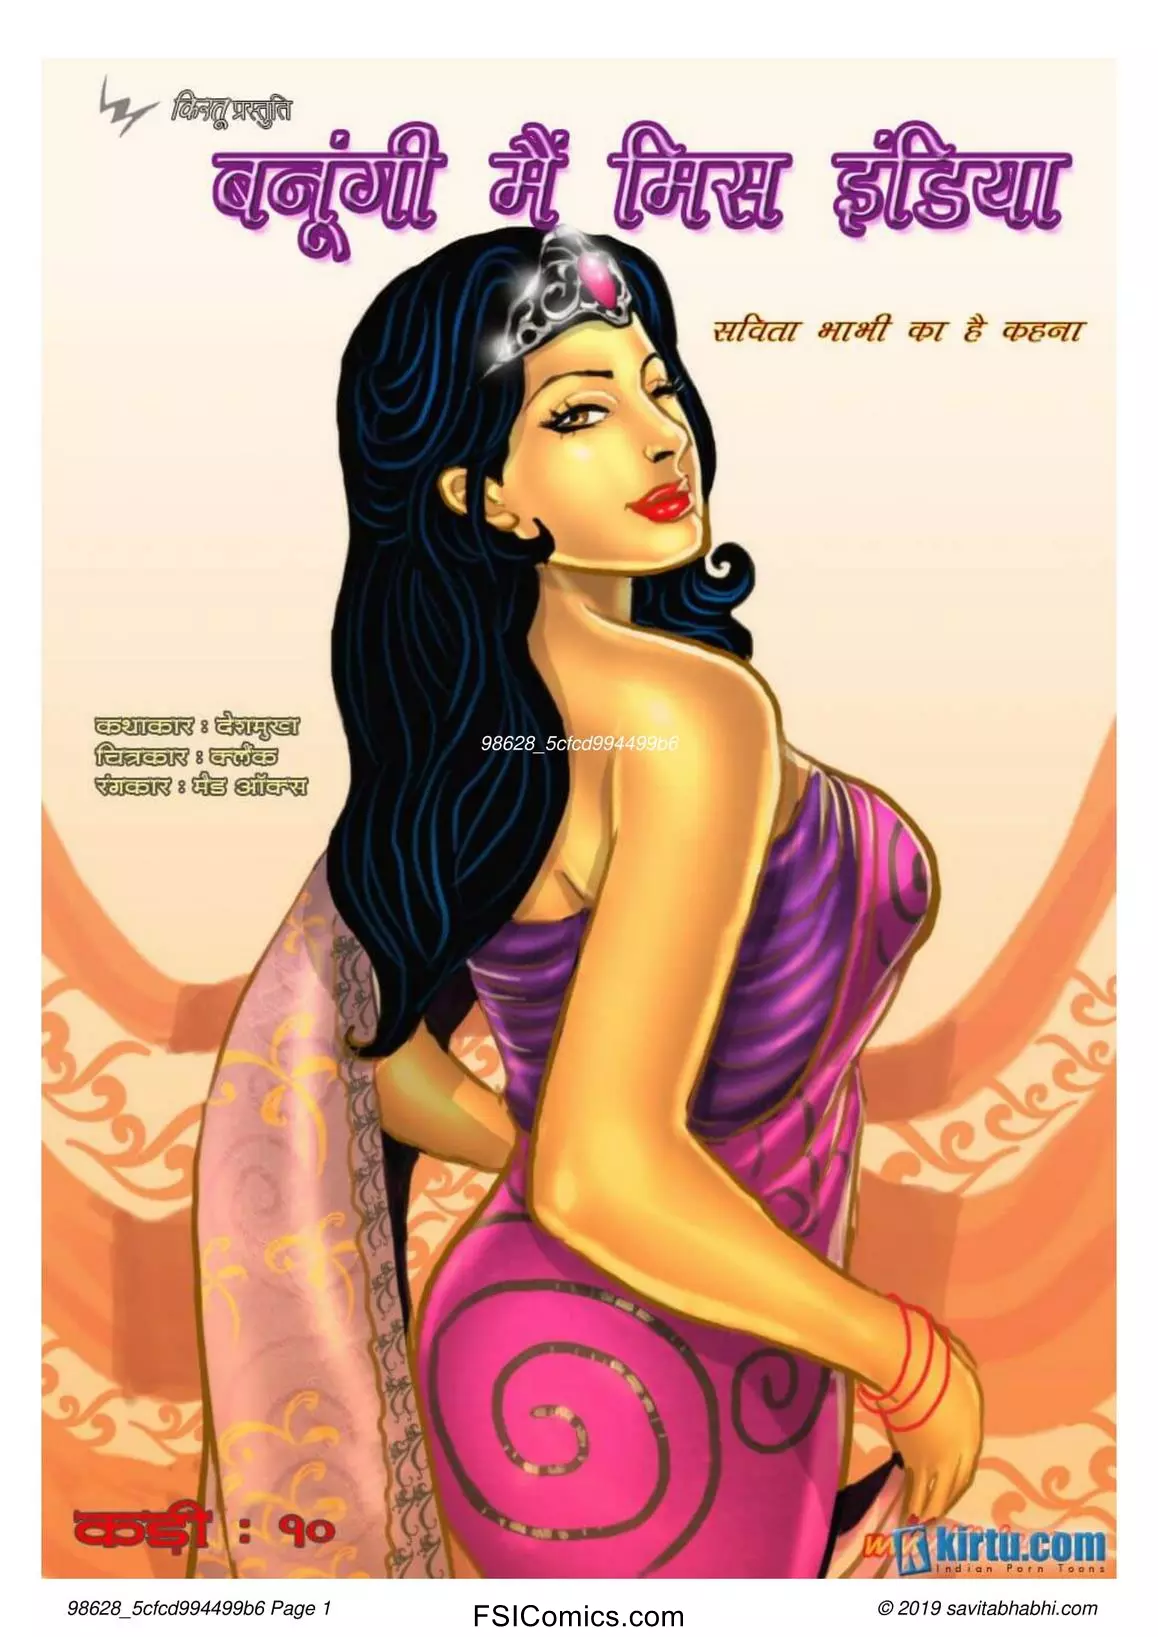 Savita Bhabhi Episode 10 Hindi – Main Banugi Miss India- (मैं बनूँगी मिस इन्डिया) - 3 - FSIComics